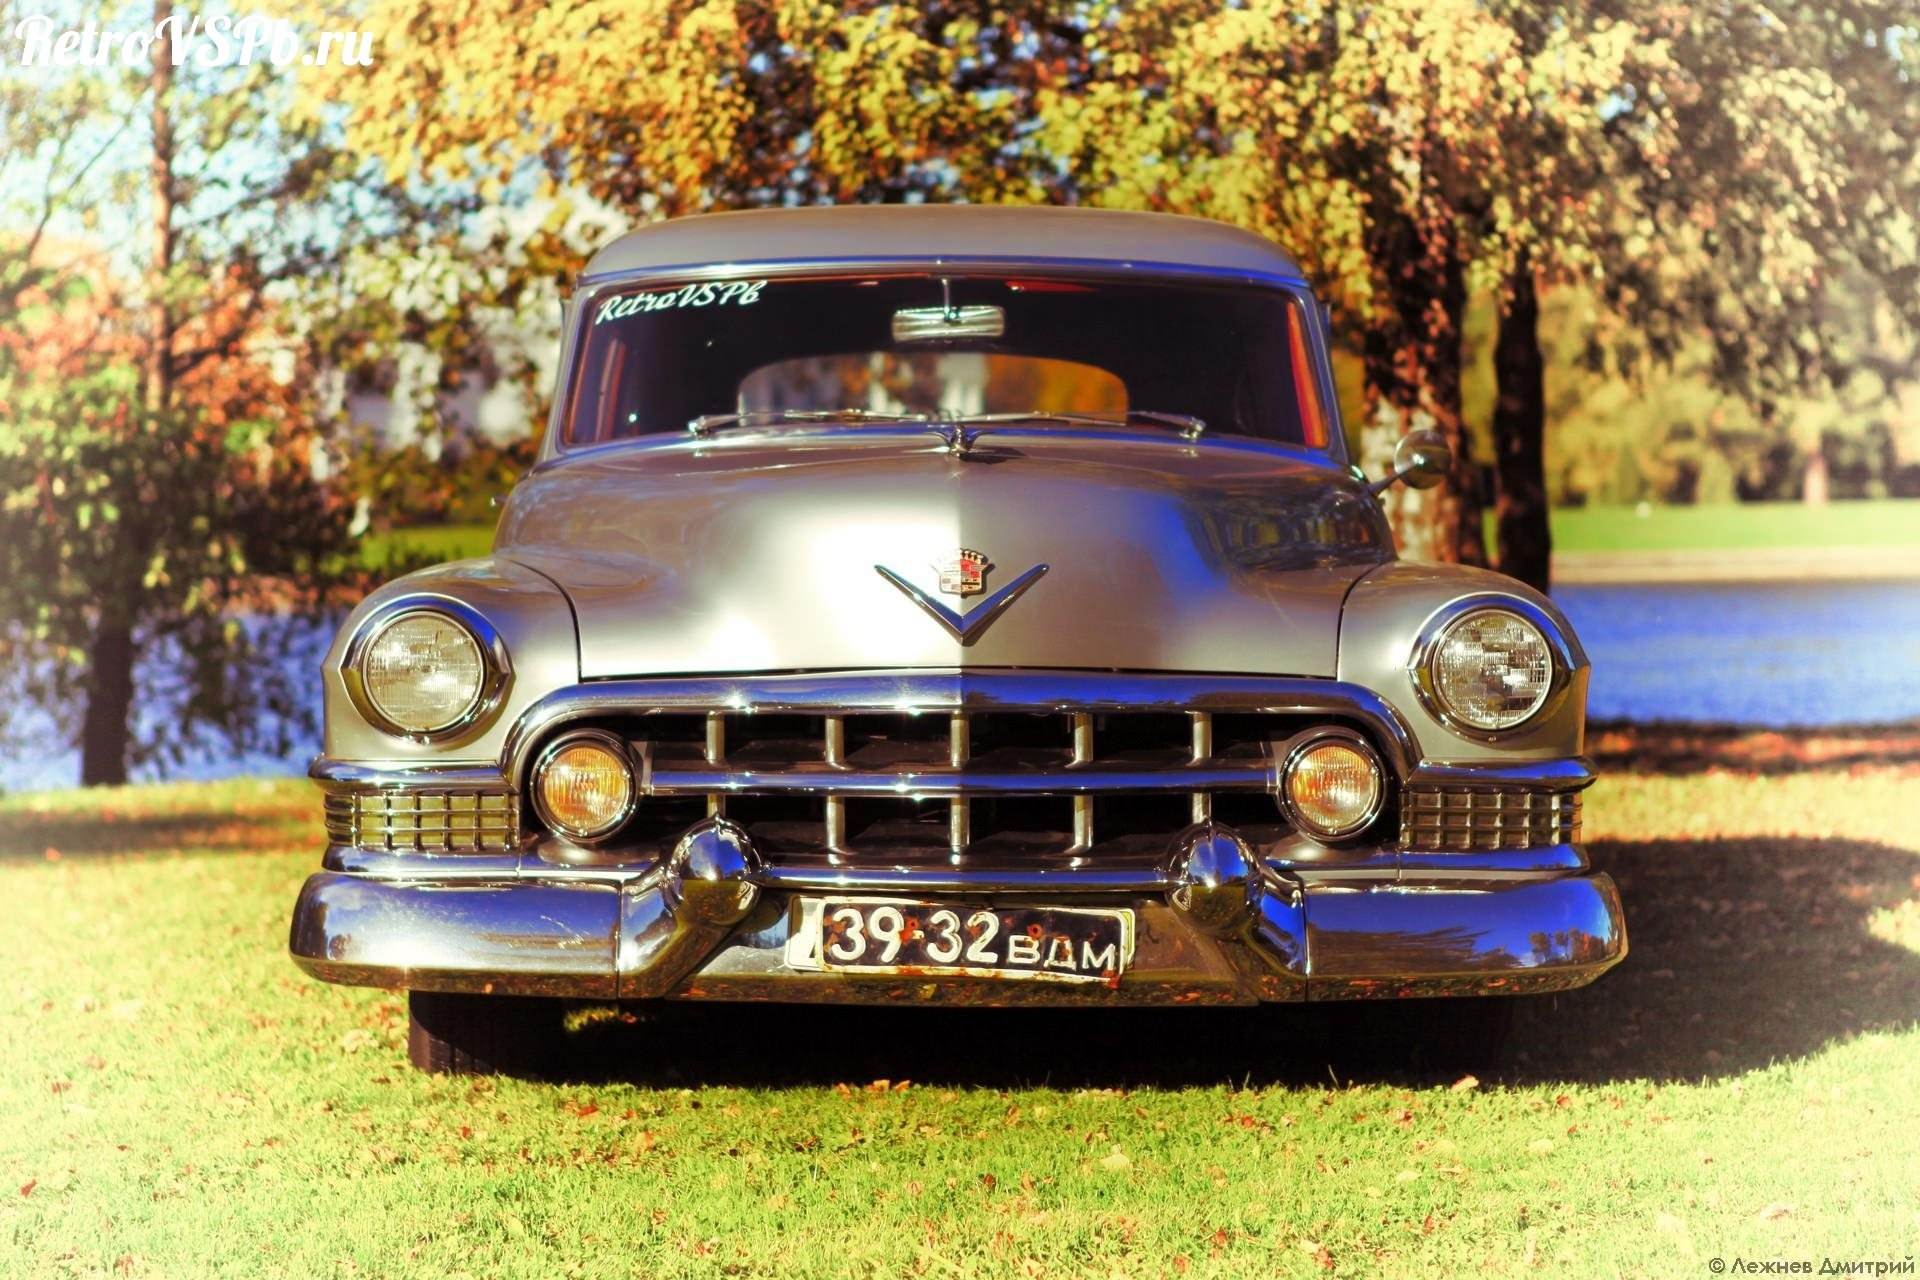 Фото 1951. Cadillac Fleetwood 1951. Cadillac Fleetwood ретро 1951. Авто Кадиллак 1951 год. Cadillac Fleetwood 1951 Санкт Петербург.